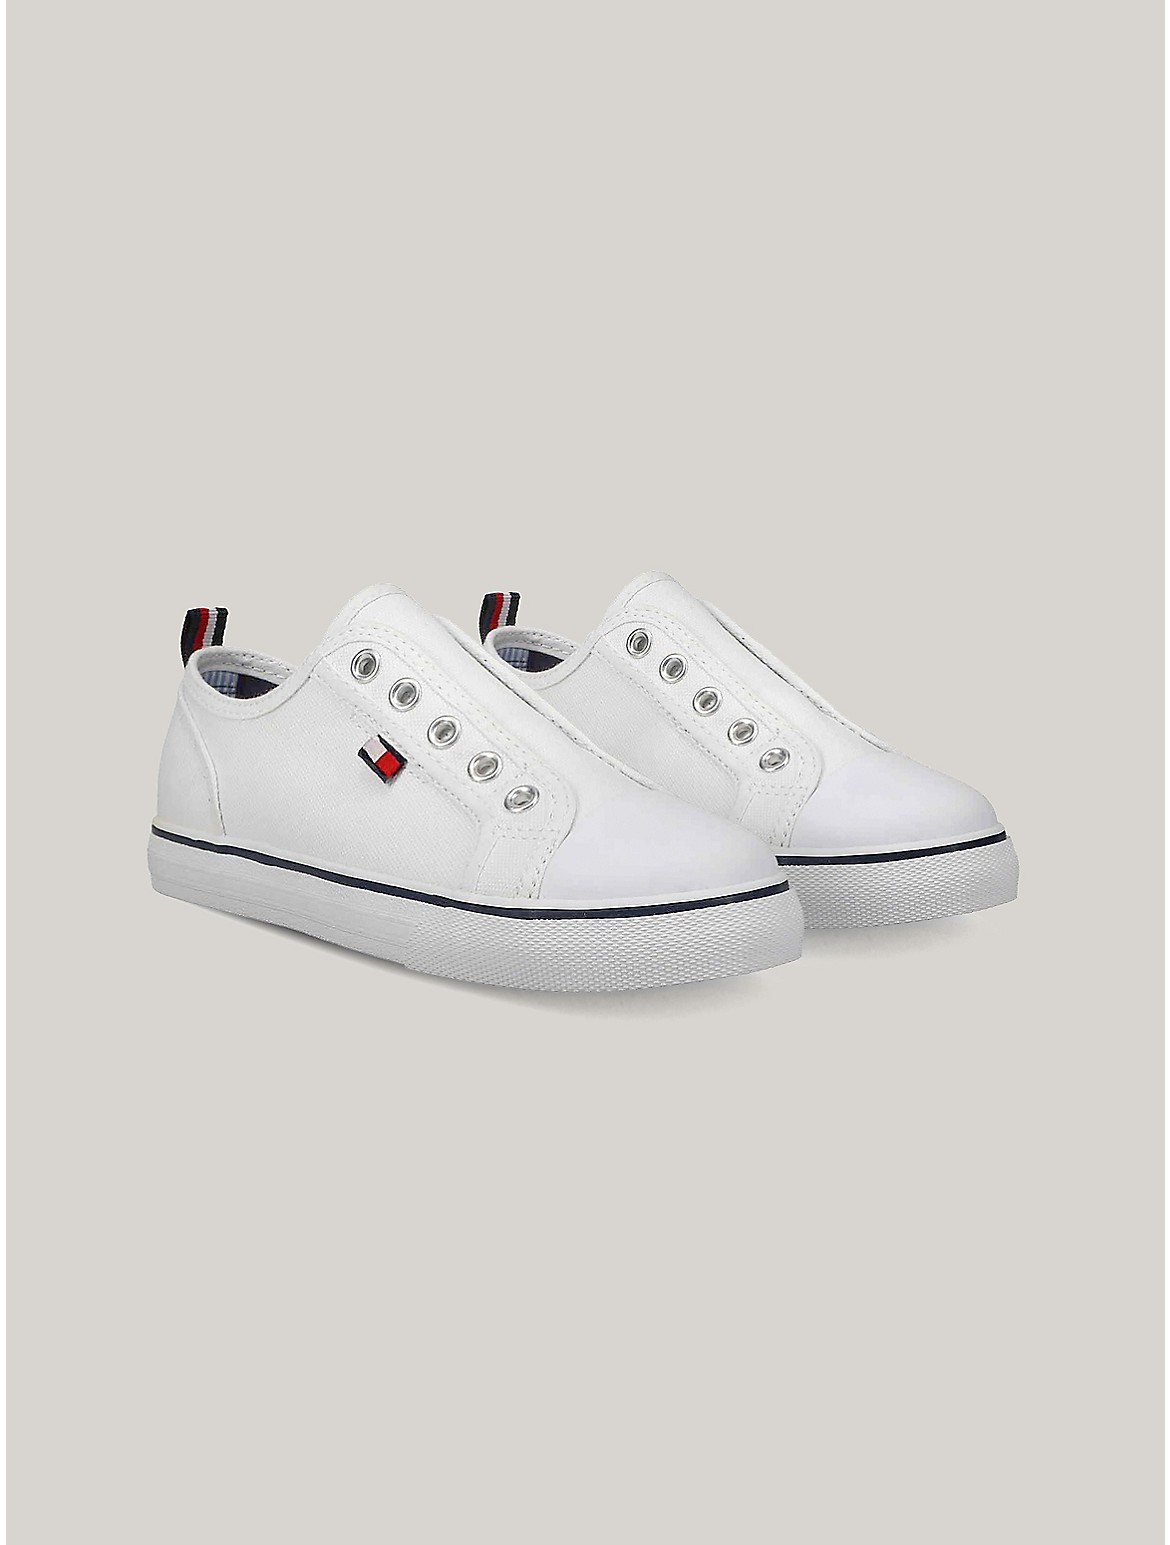 Tommy Hilfiger Kids' Laceless Sneaker - White - 10T